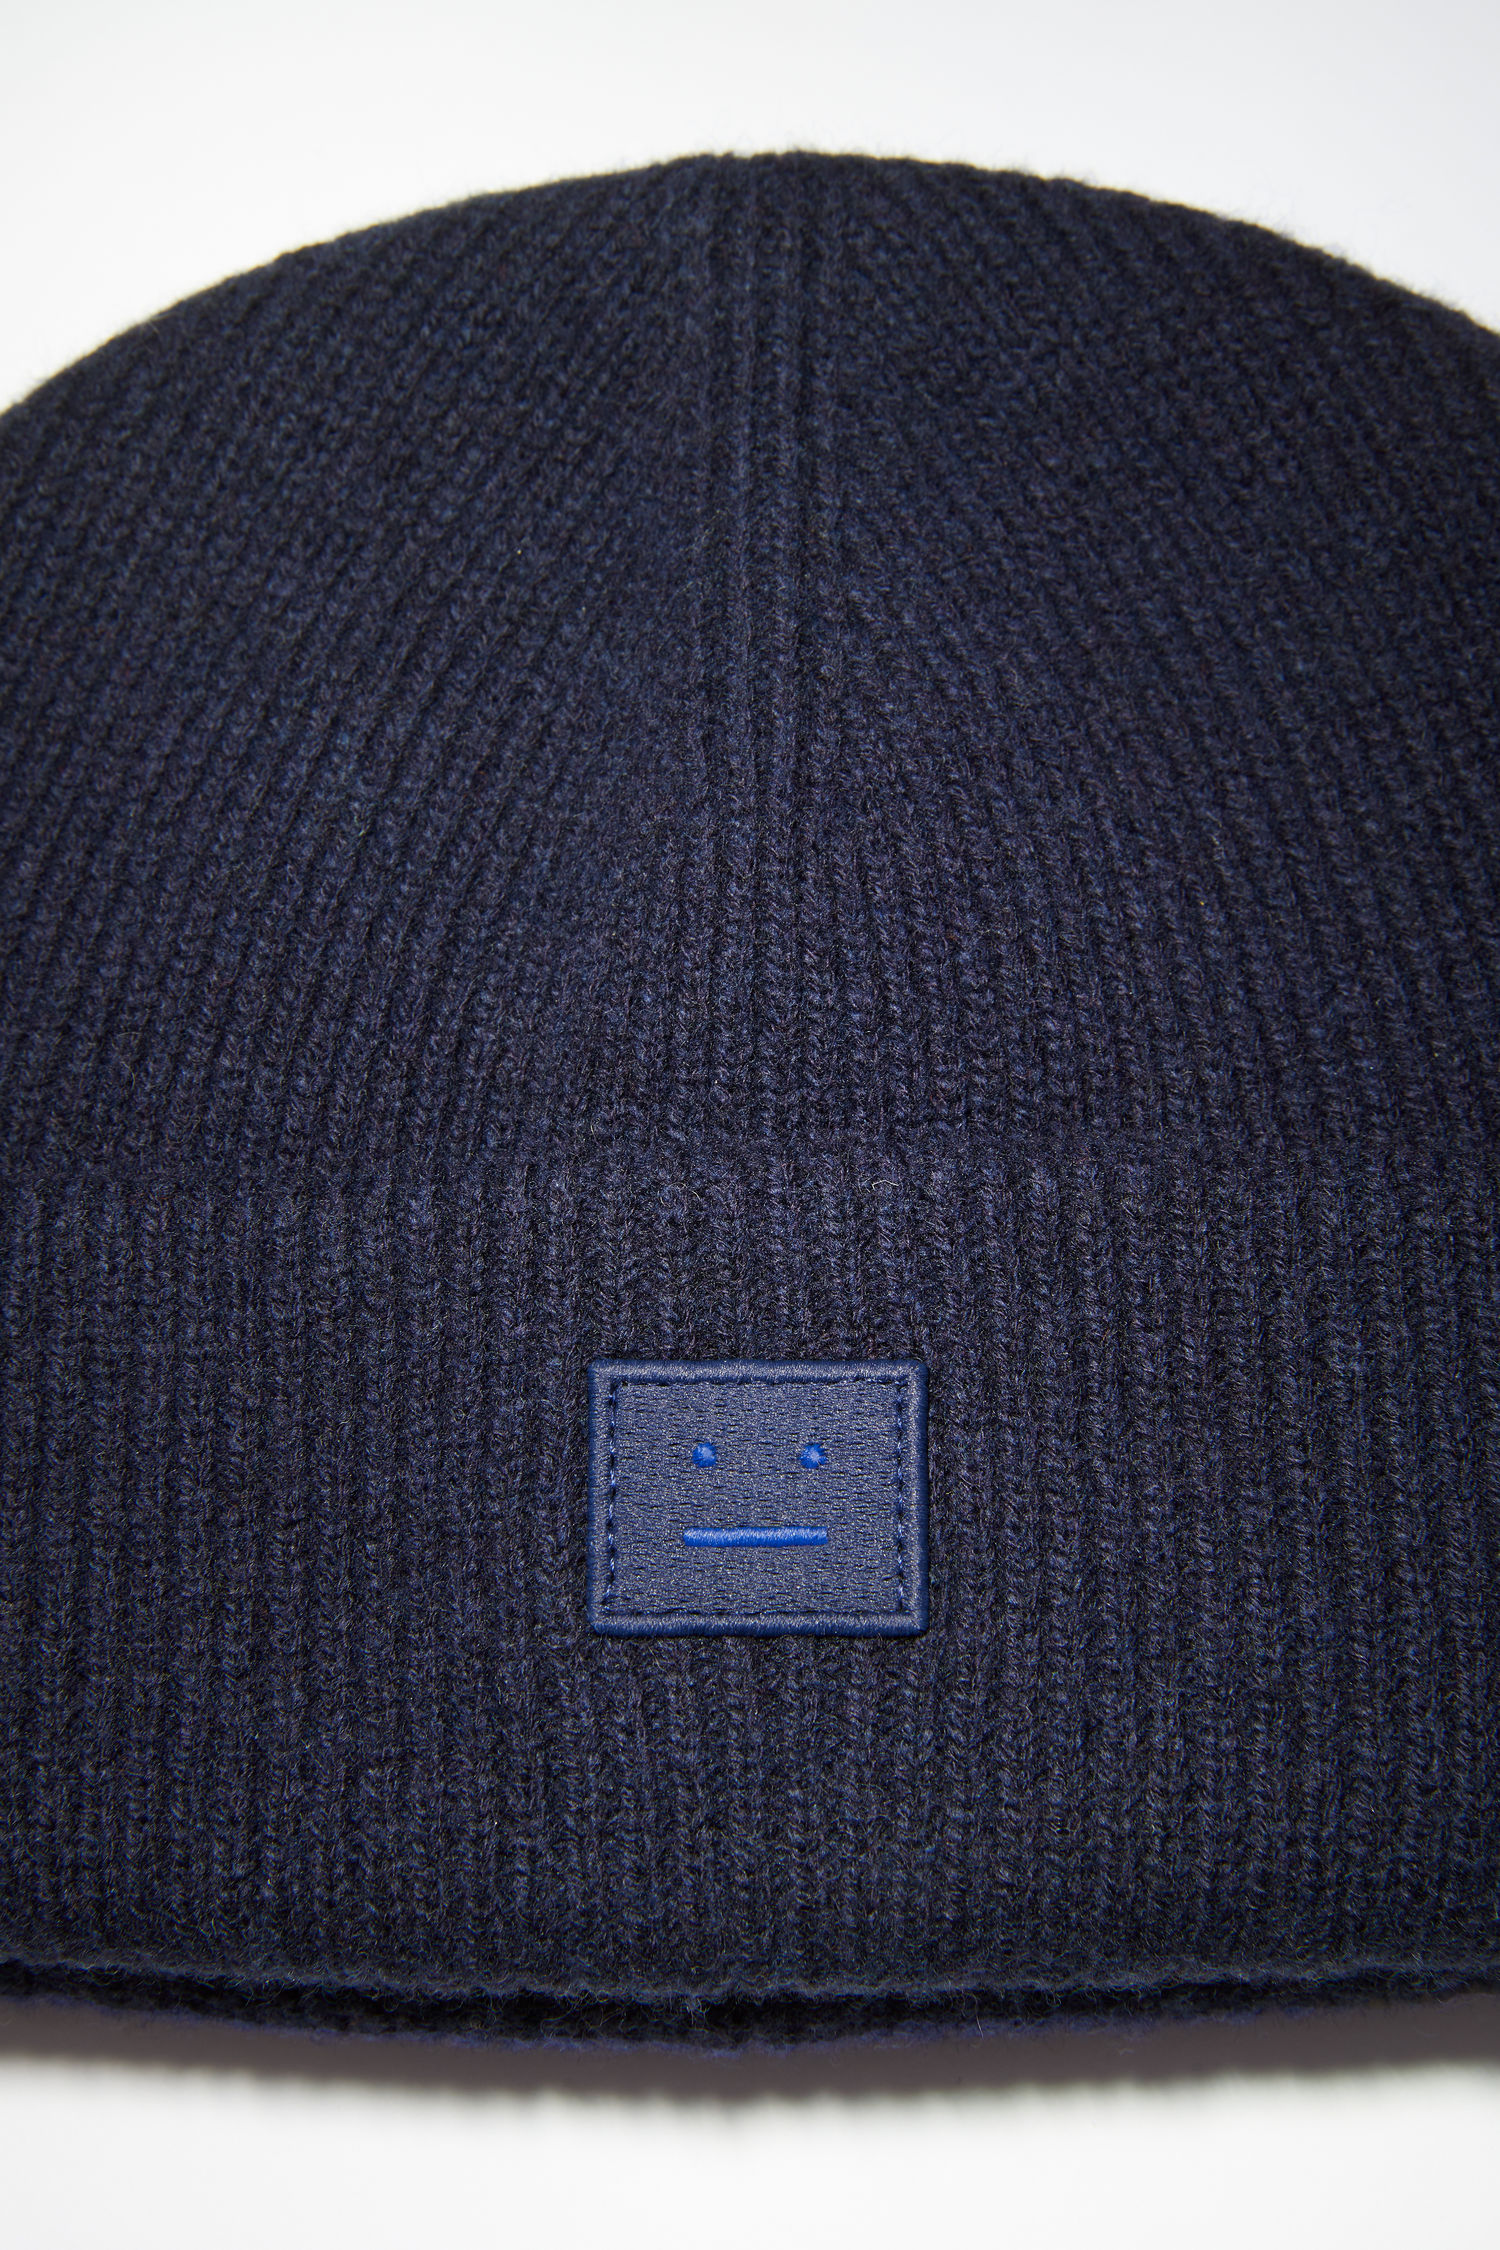 Acne Studios - Rib knit beanie - Navy